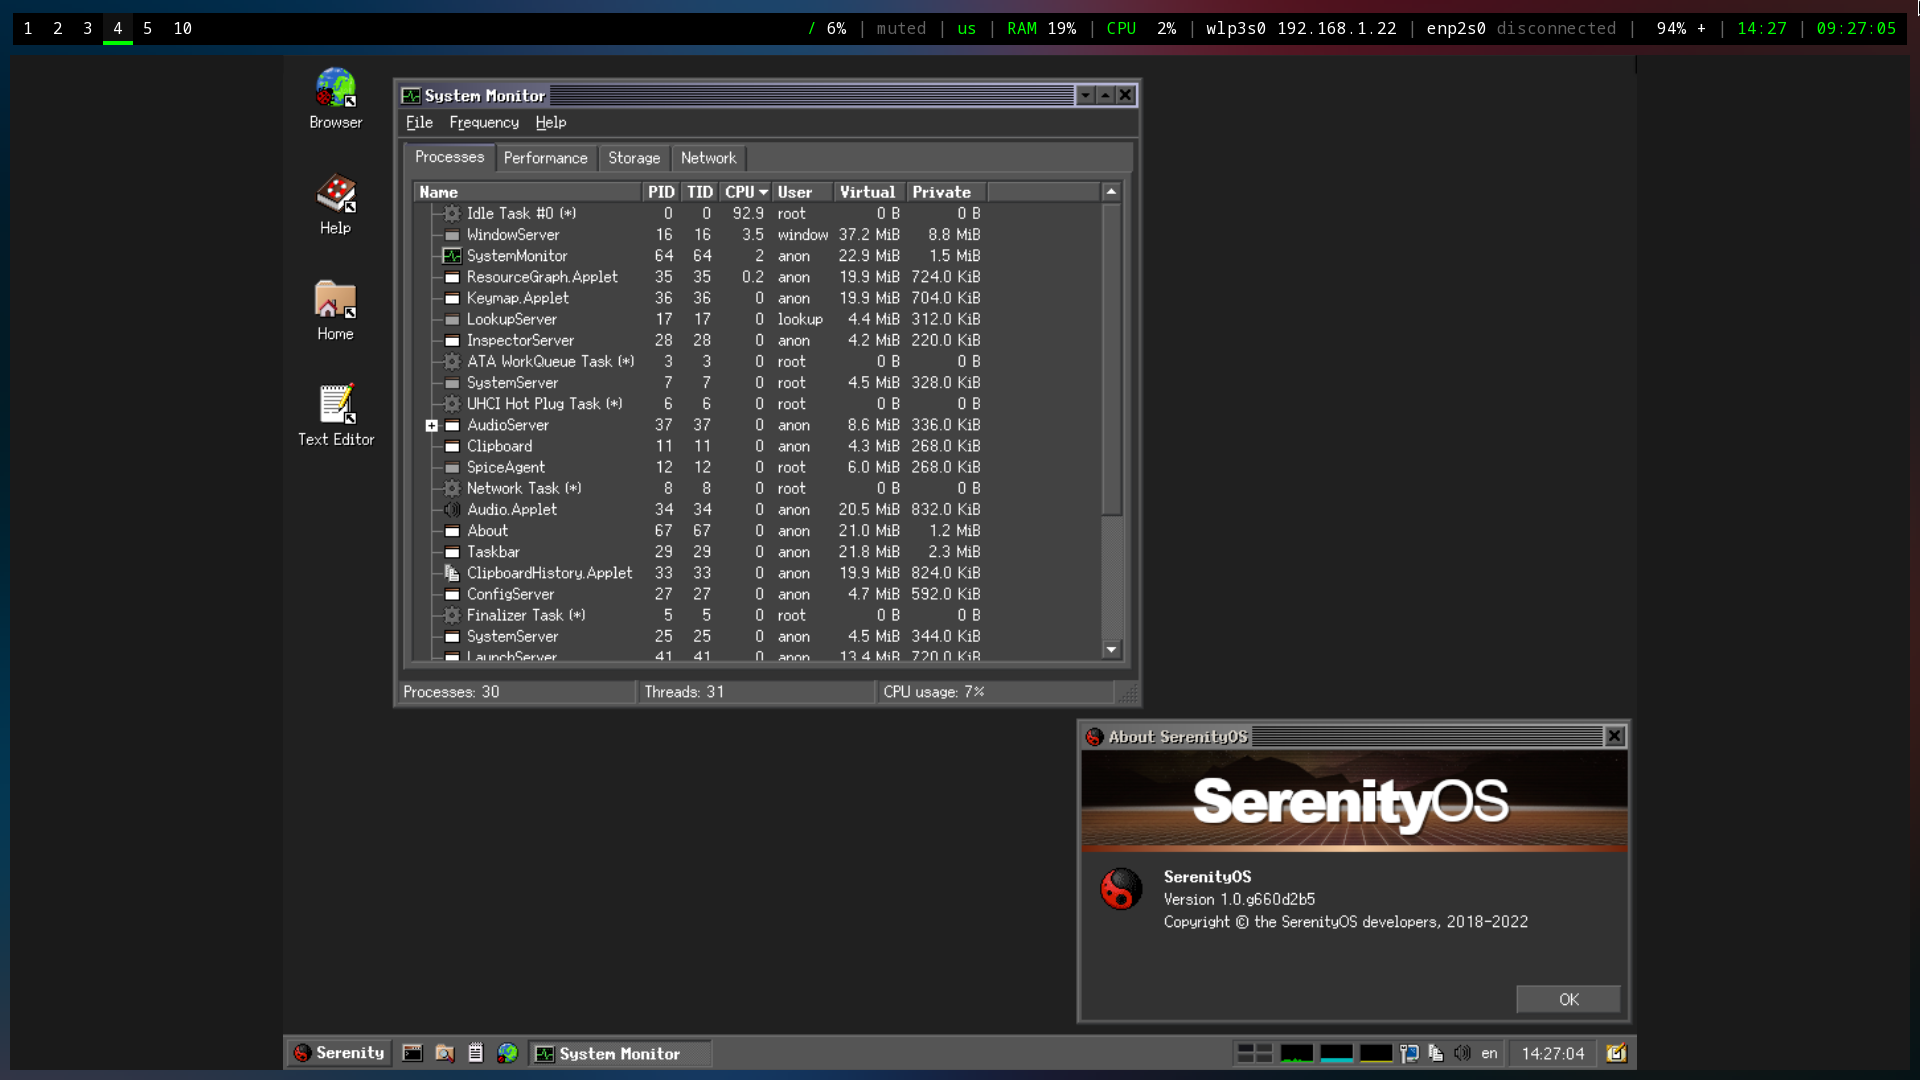 SerenityOS System
Monitor